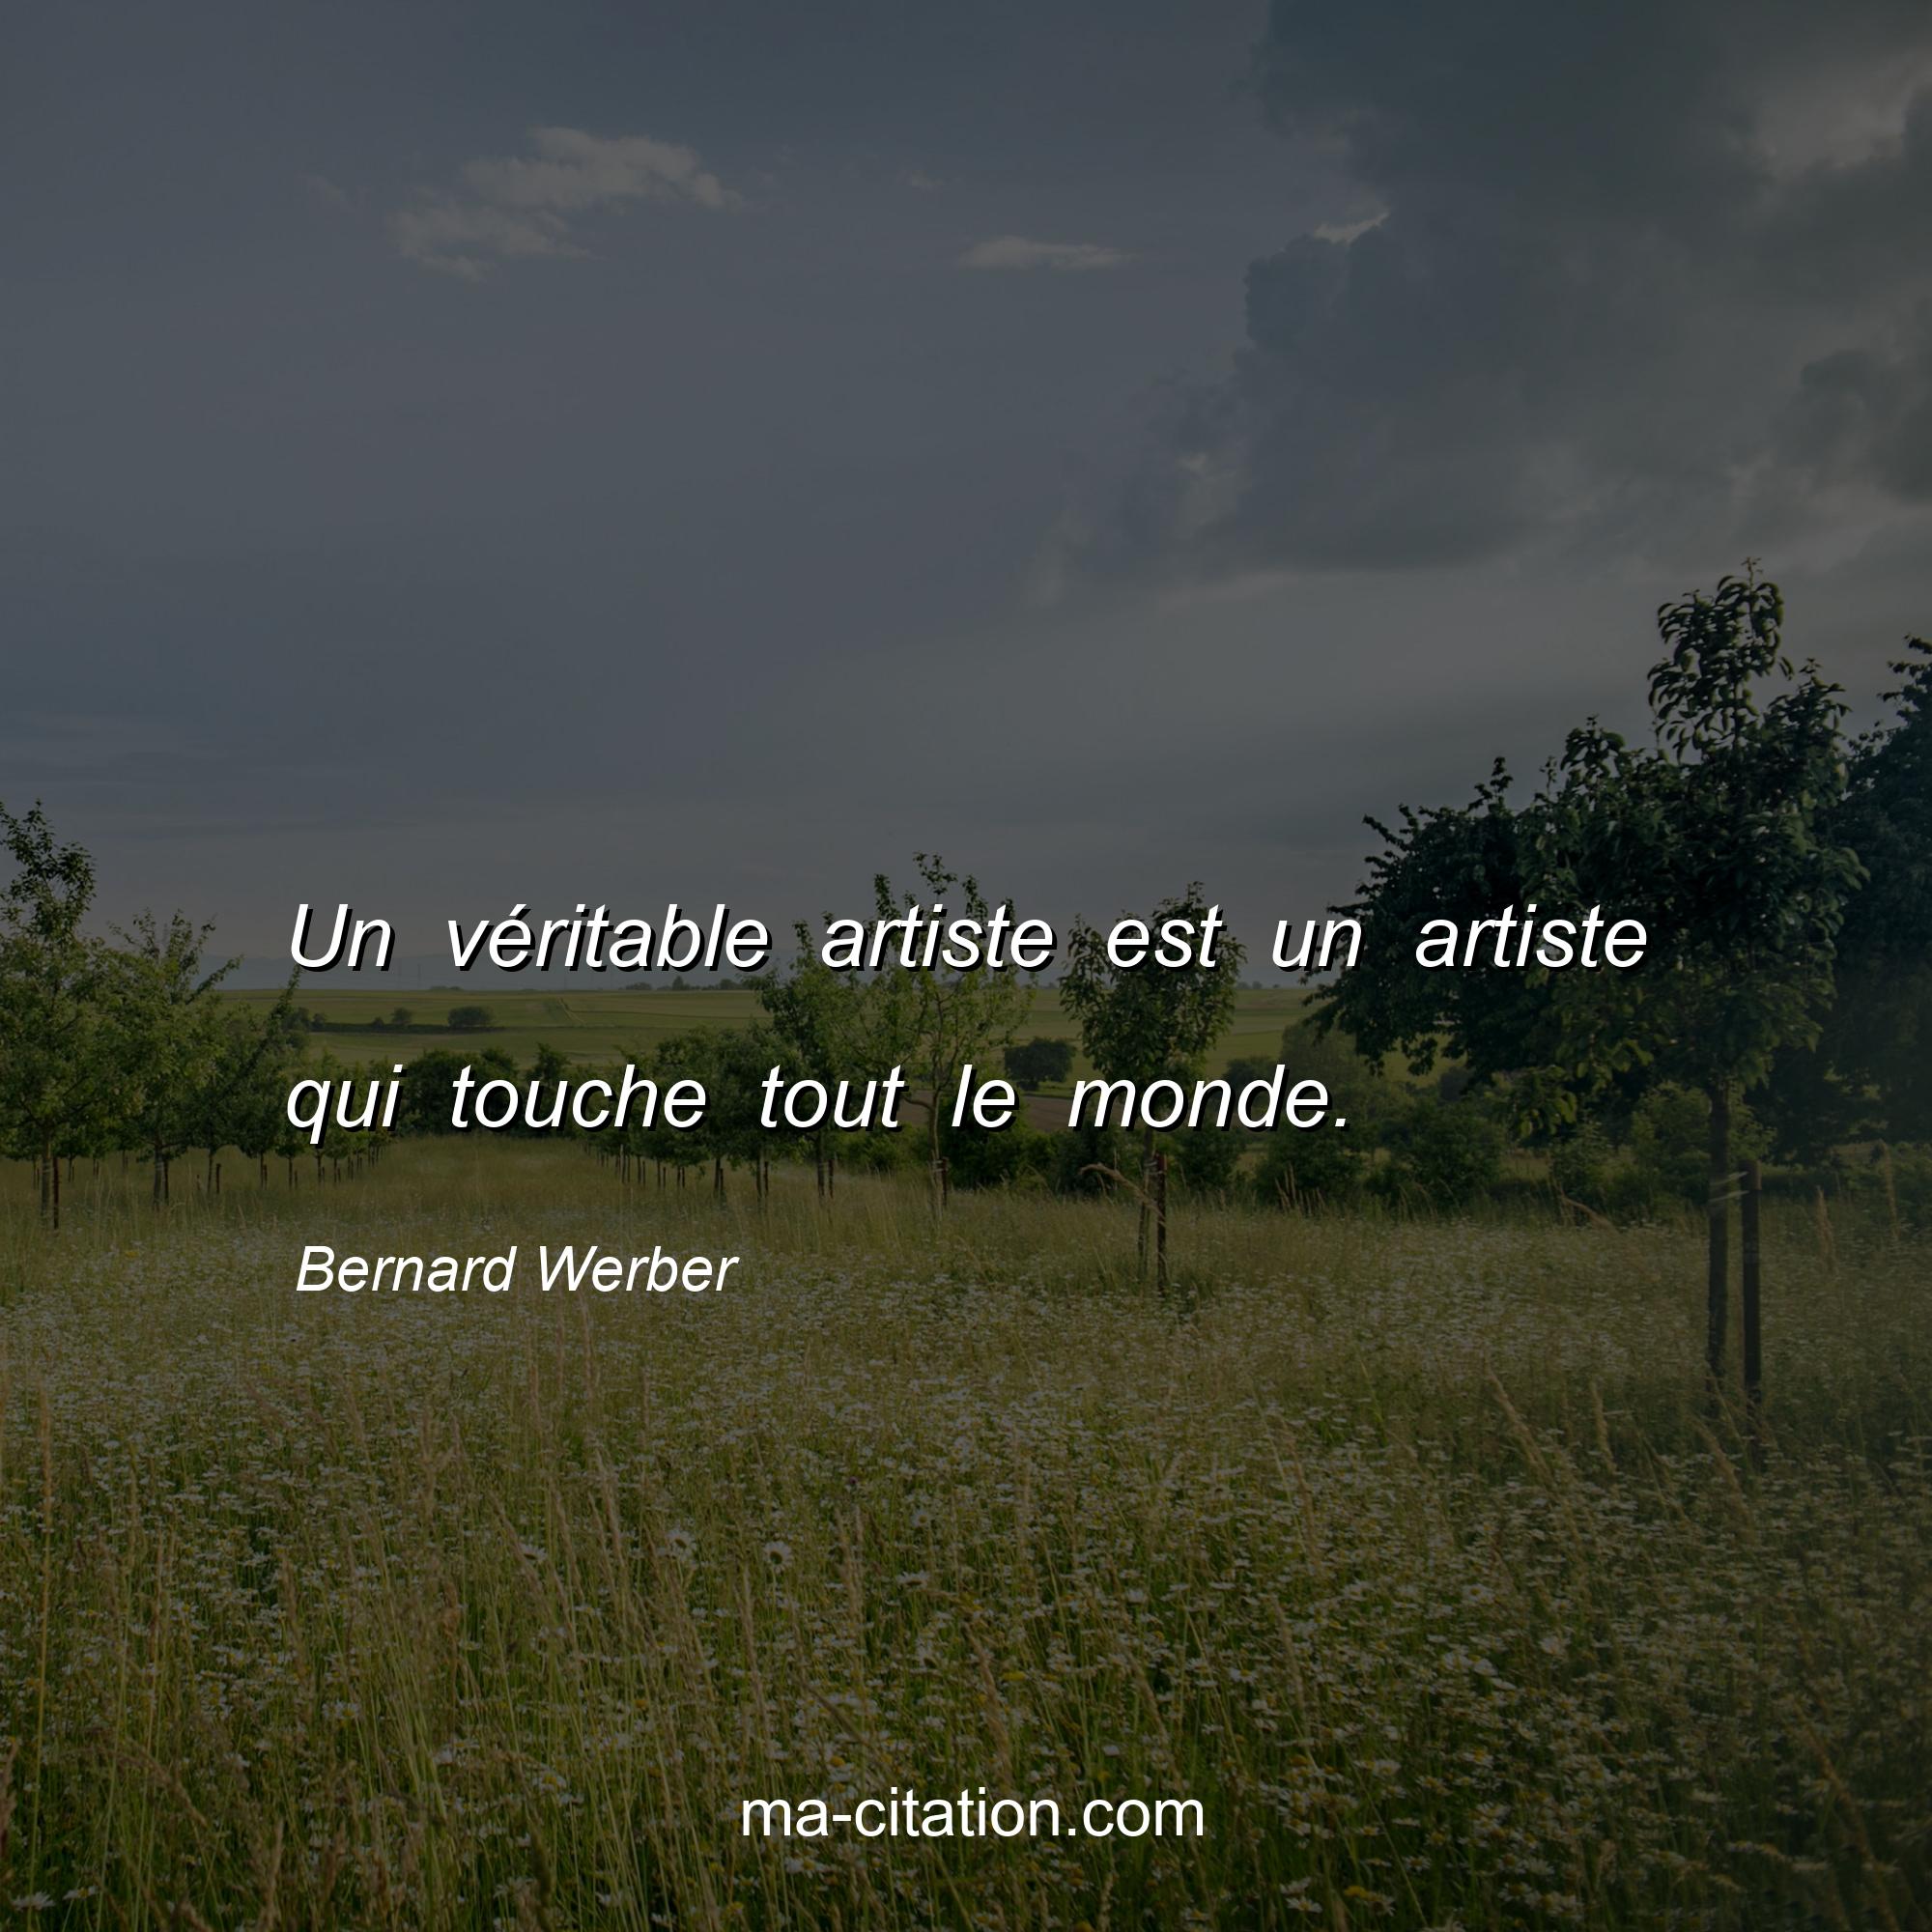 Bernard Werber : Un véritable artiste est un artiste qui touche tout le monde.